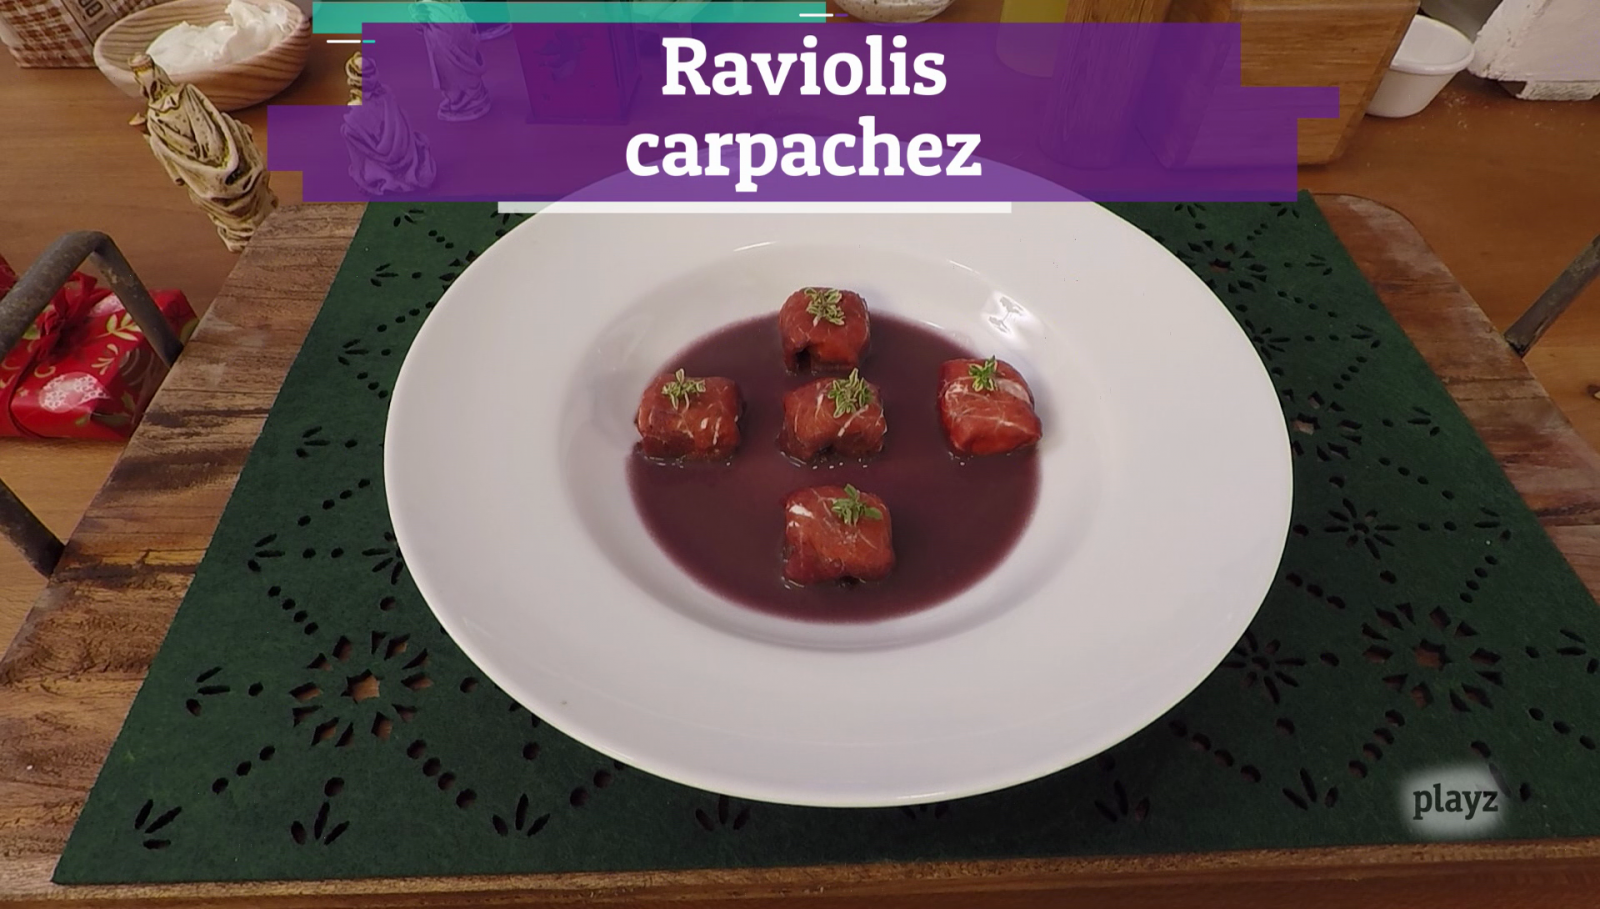 PlayChez: Receta: raviolis carpachez  | RTVE Play